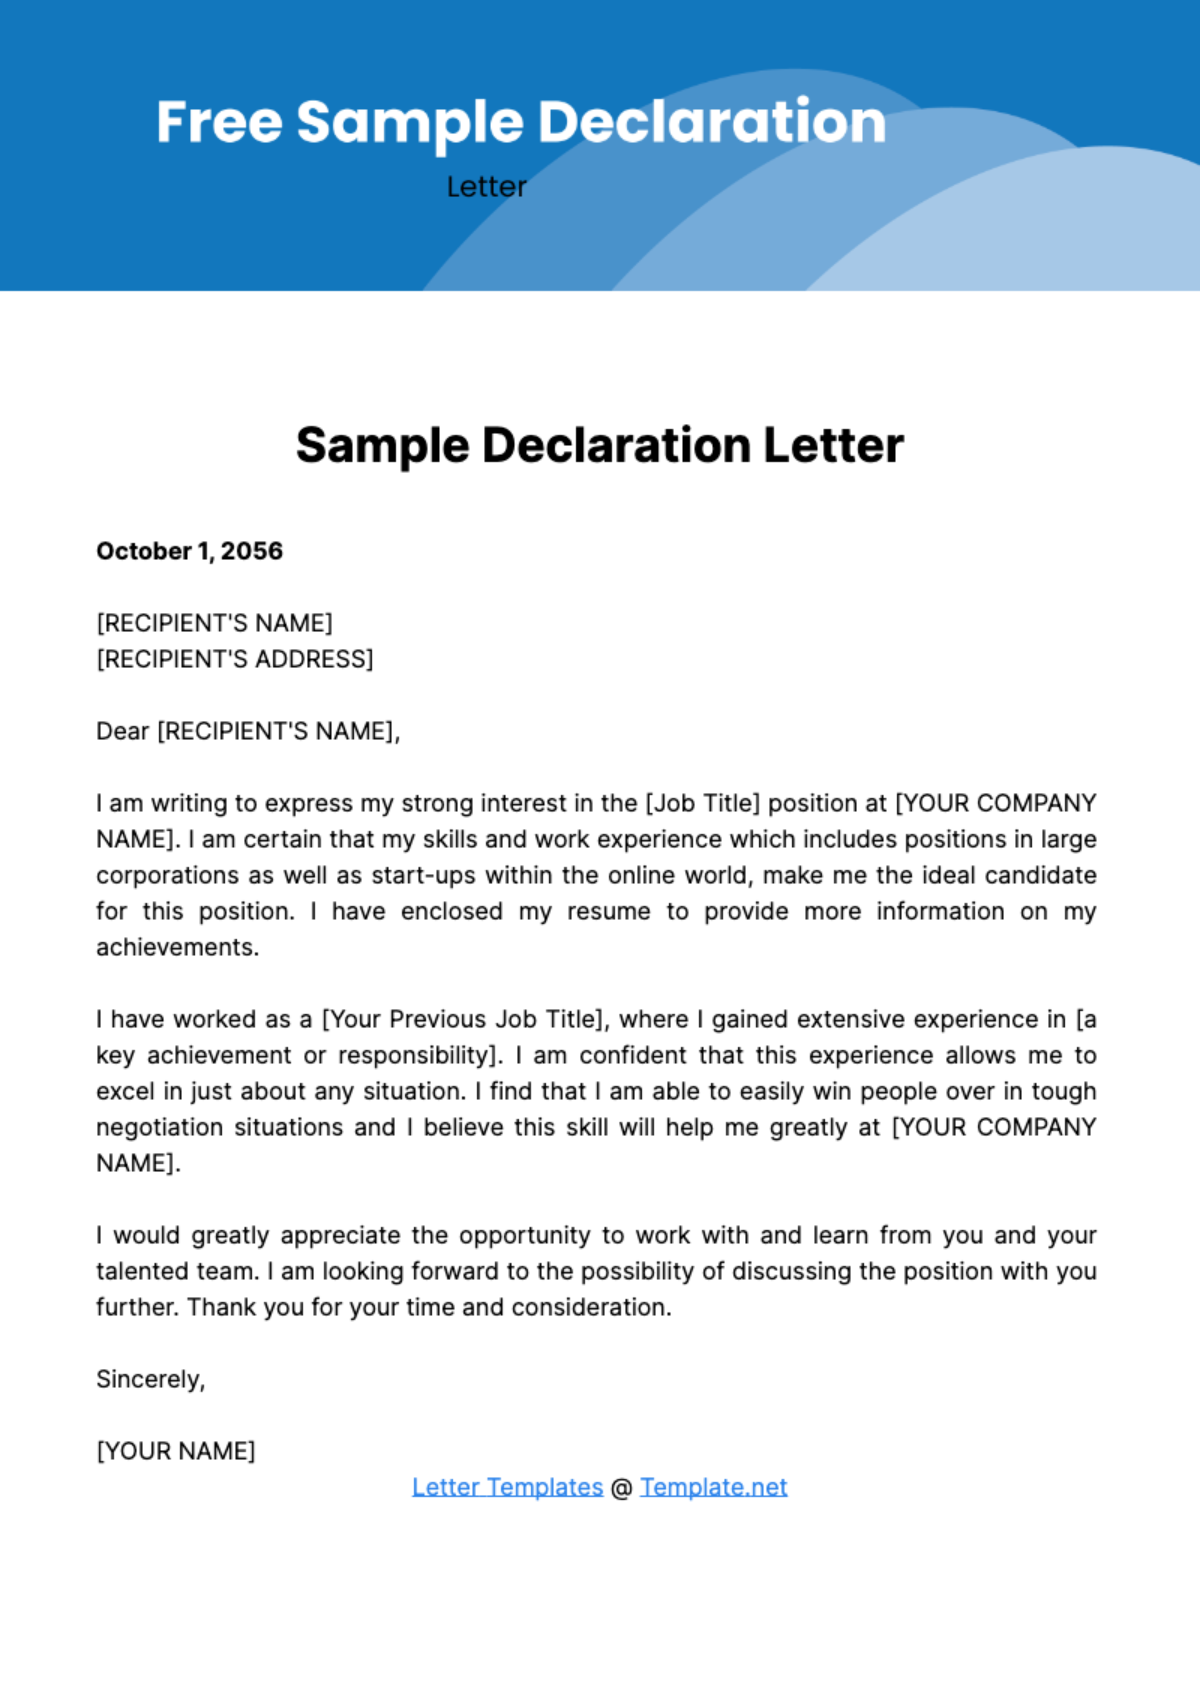 Sample Declaration Letter Template